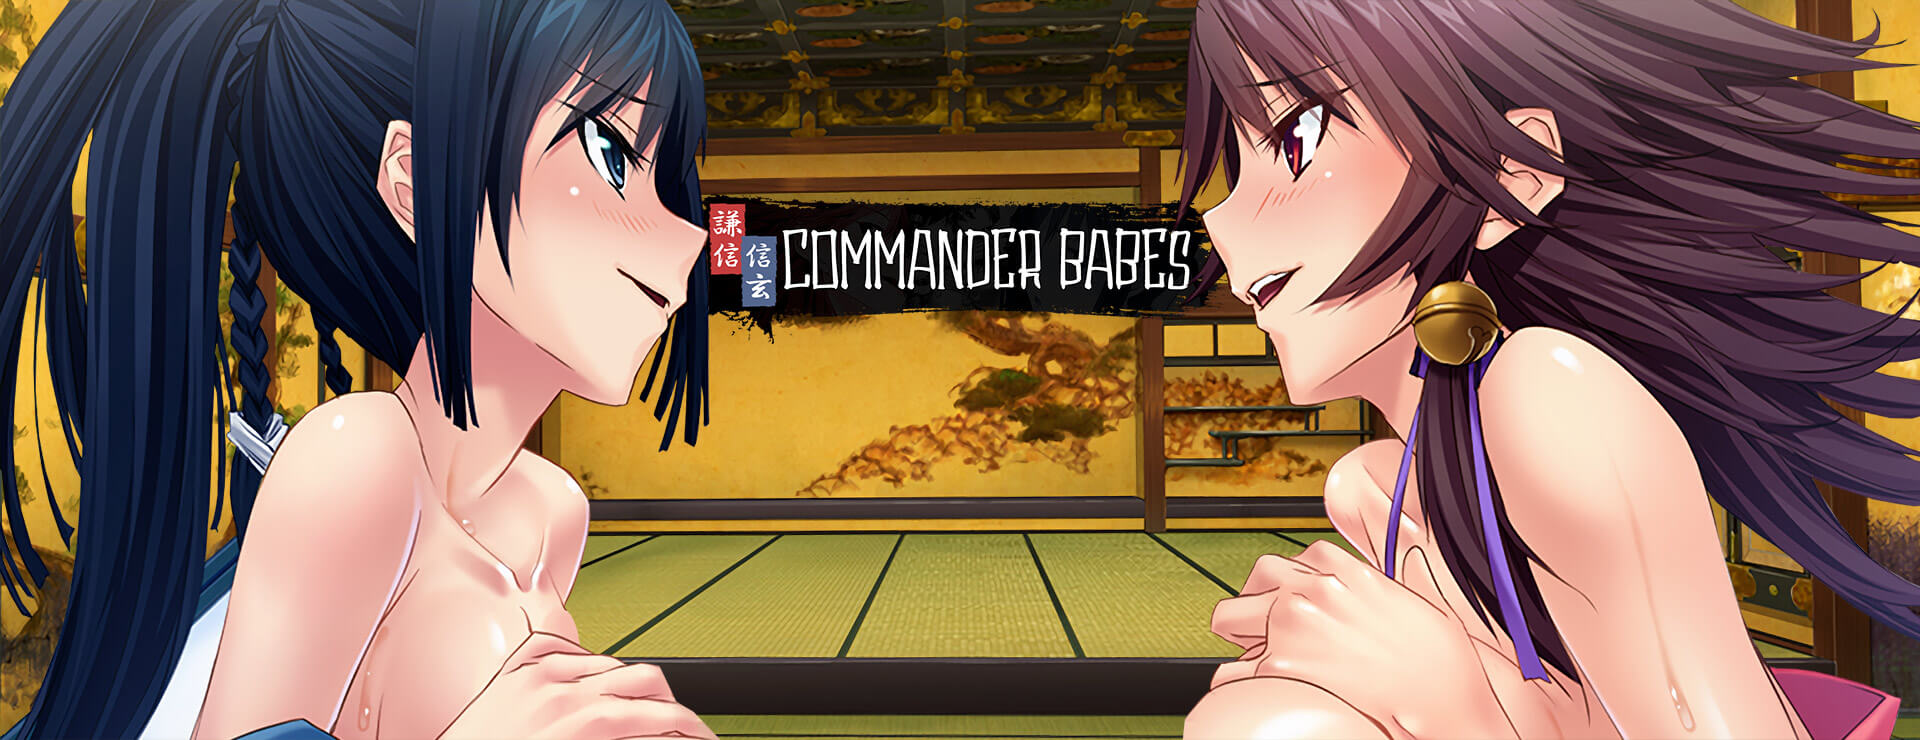 Commander Babes - Visual Novel Game